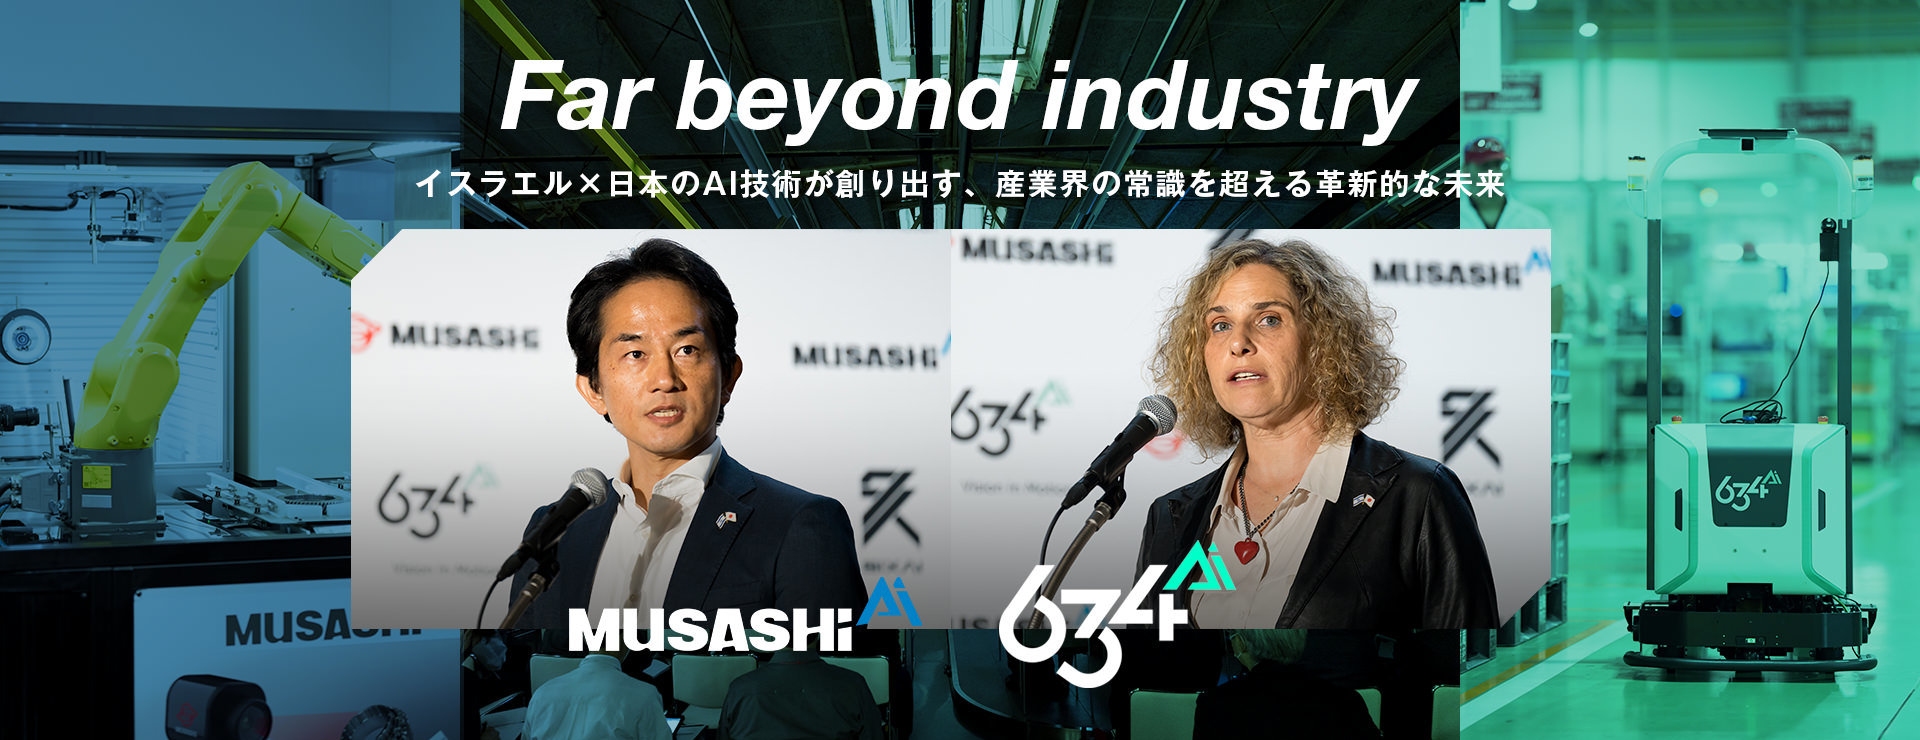 「Far beyond industry」- イスラエル×日本のAI技術が創り出す、産業界の常識を超える革新的な未来